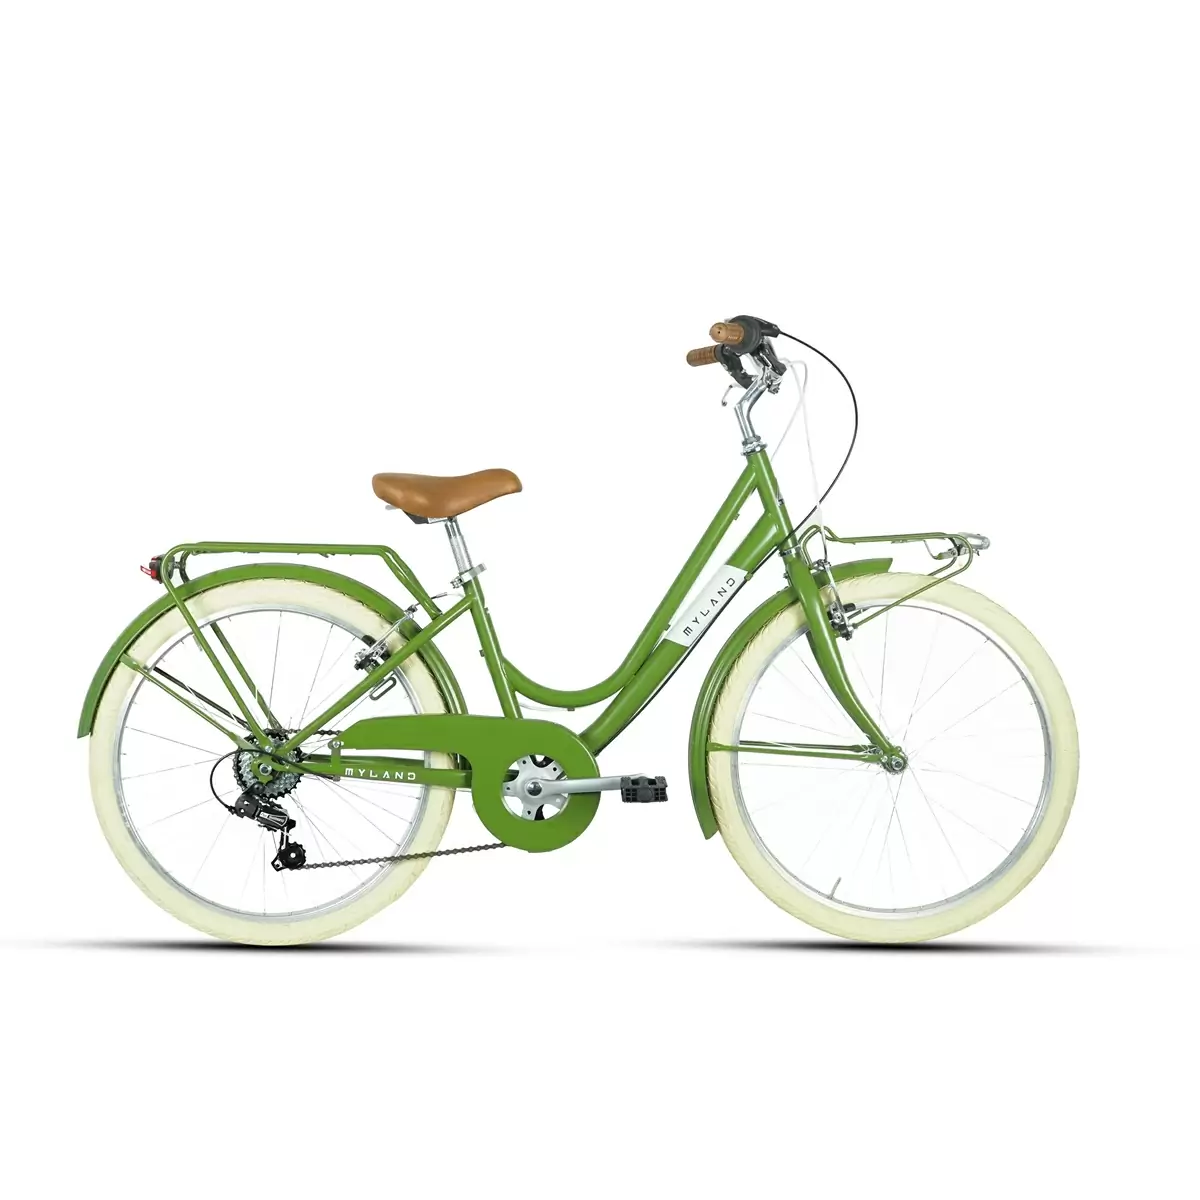 Bicicleta Urbana KID 24.1 24'' Niña 8-11 Años 6s Verde - image